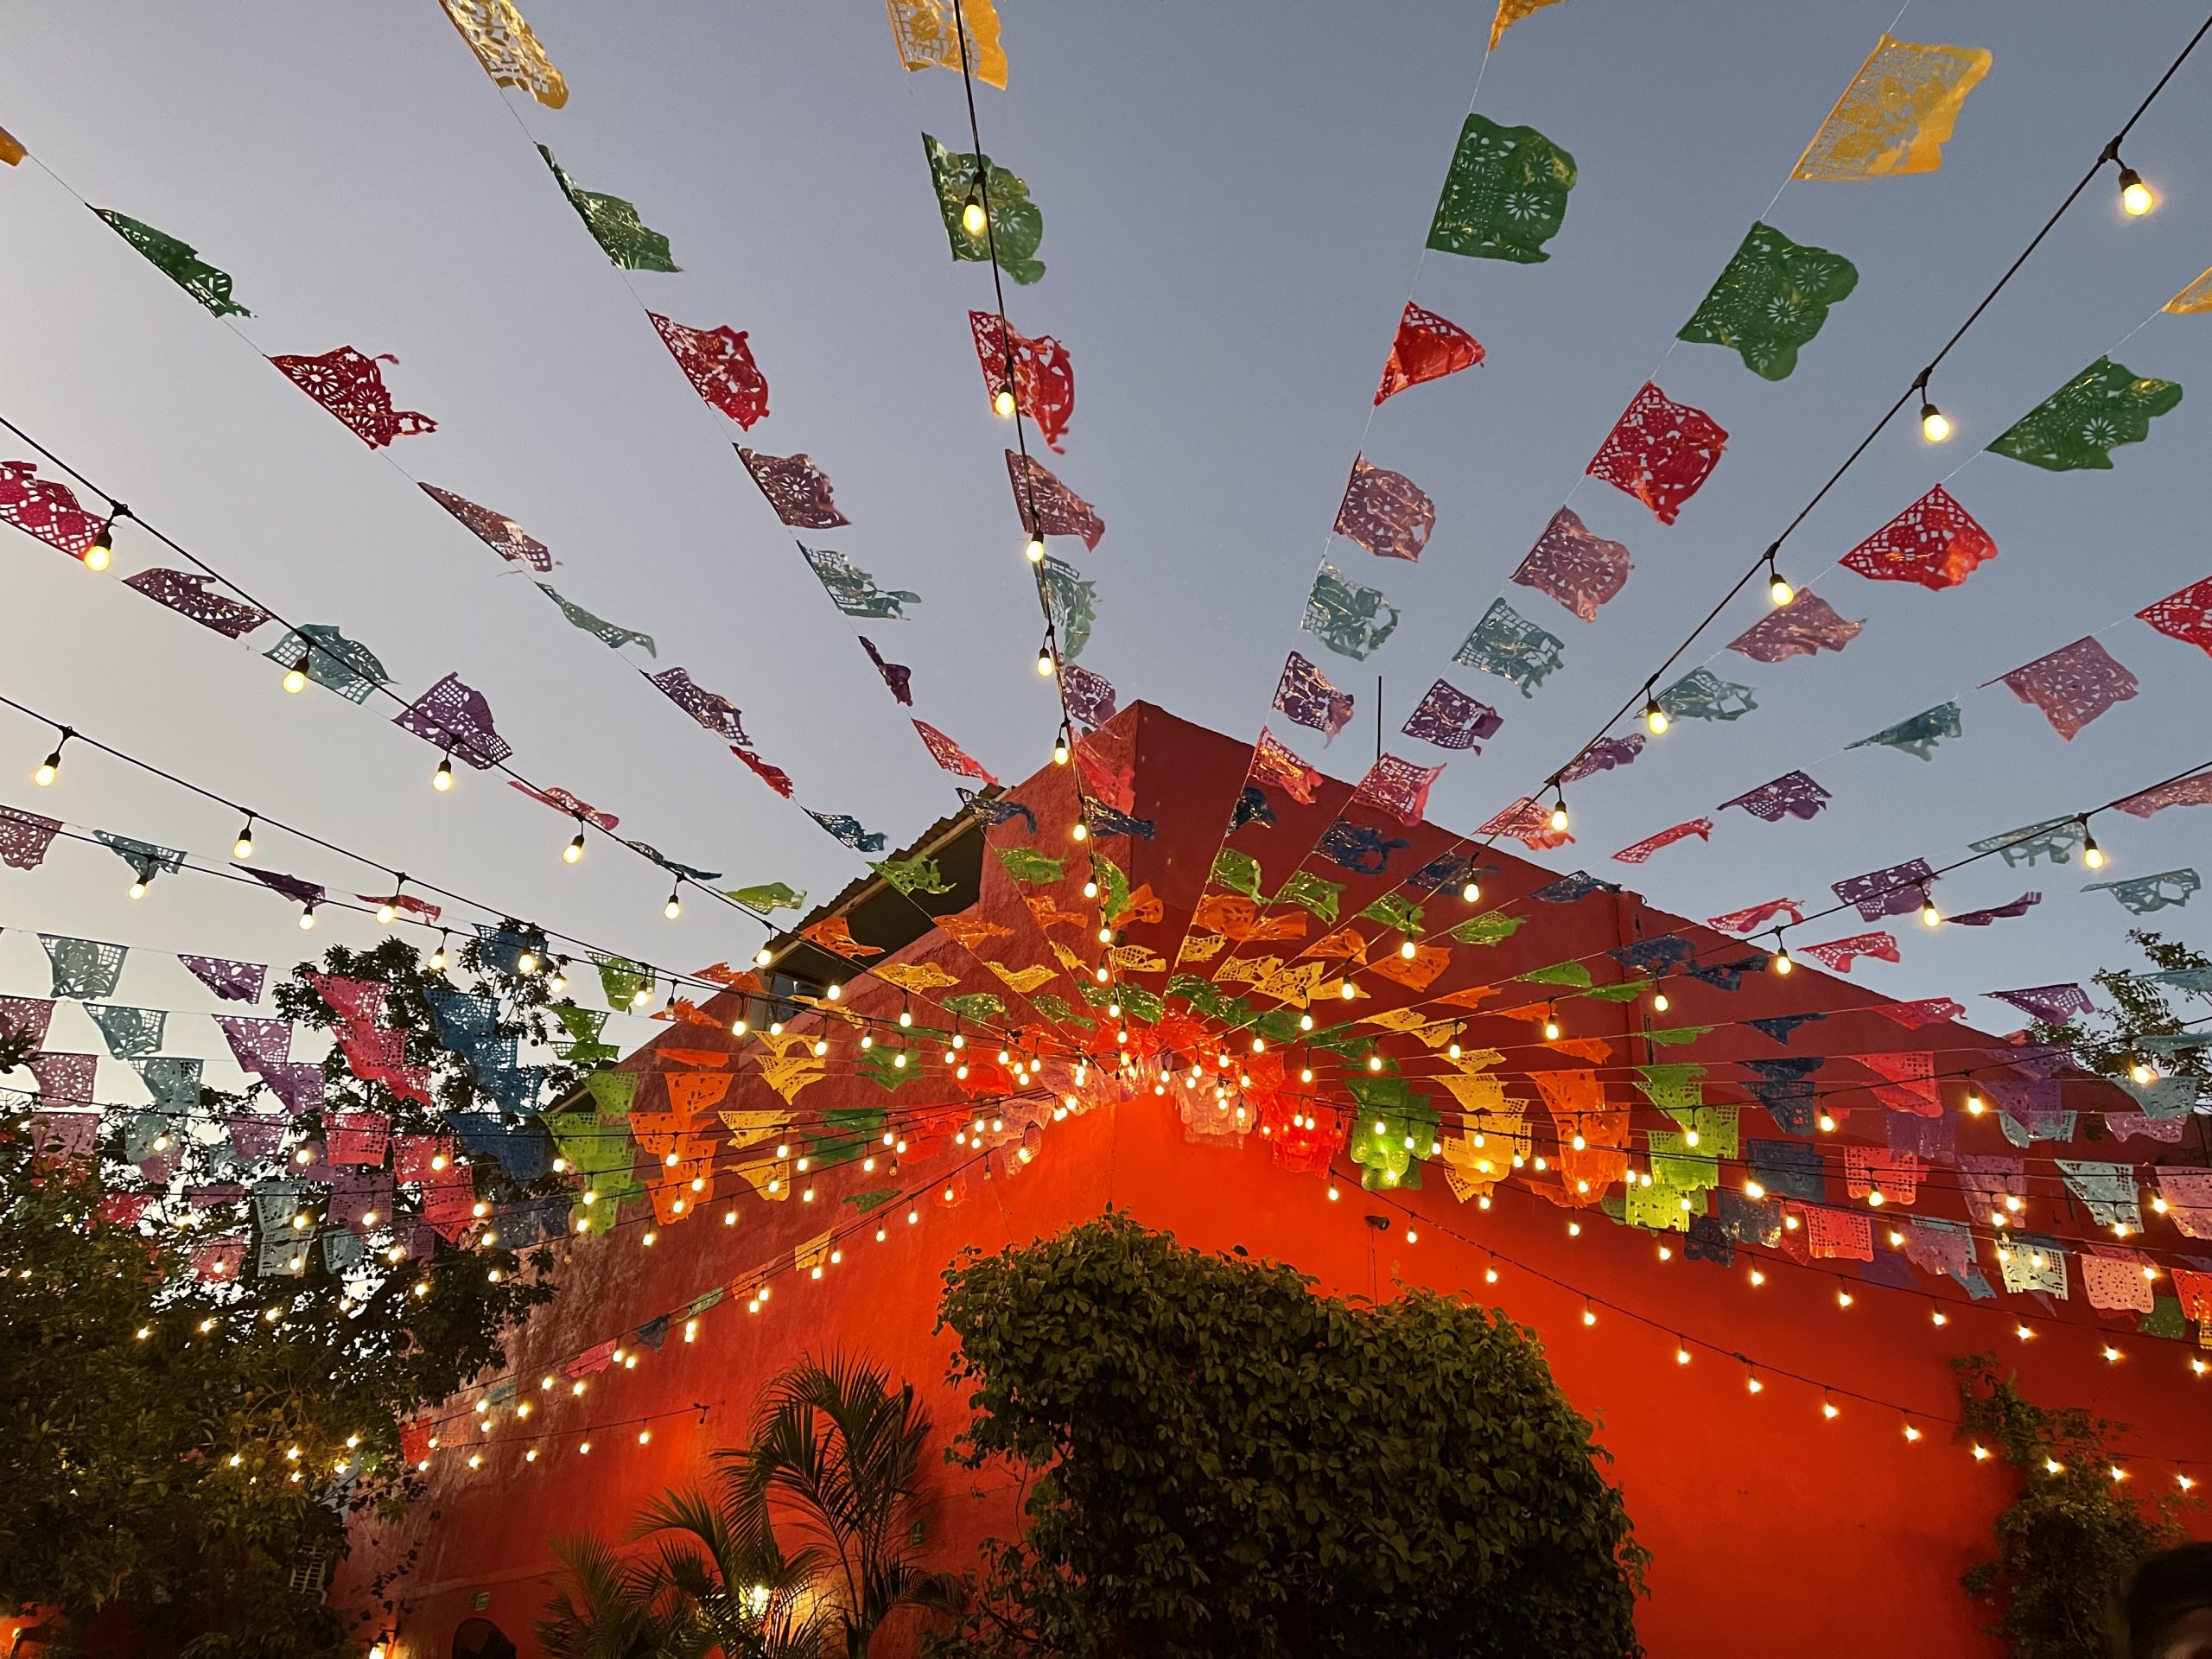 flags waving at red building at los tres gallos in cabo san lucas mexico